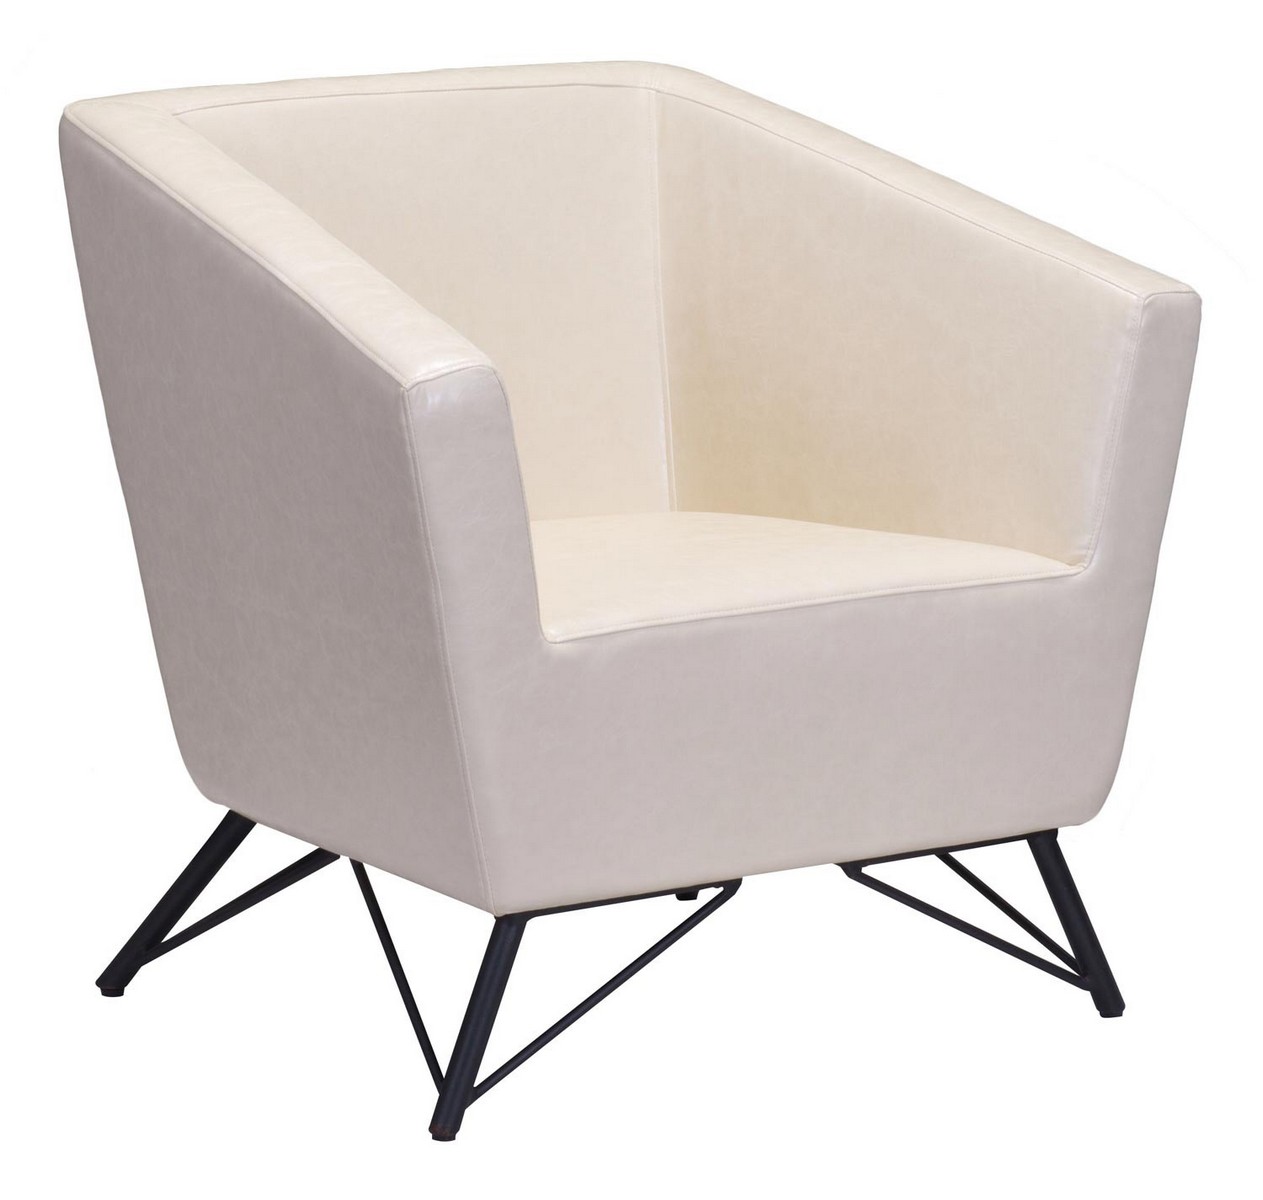 Zuo Modern Brussels Occasional Chair - Cream